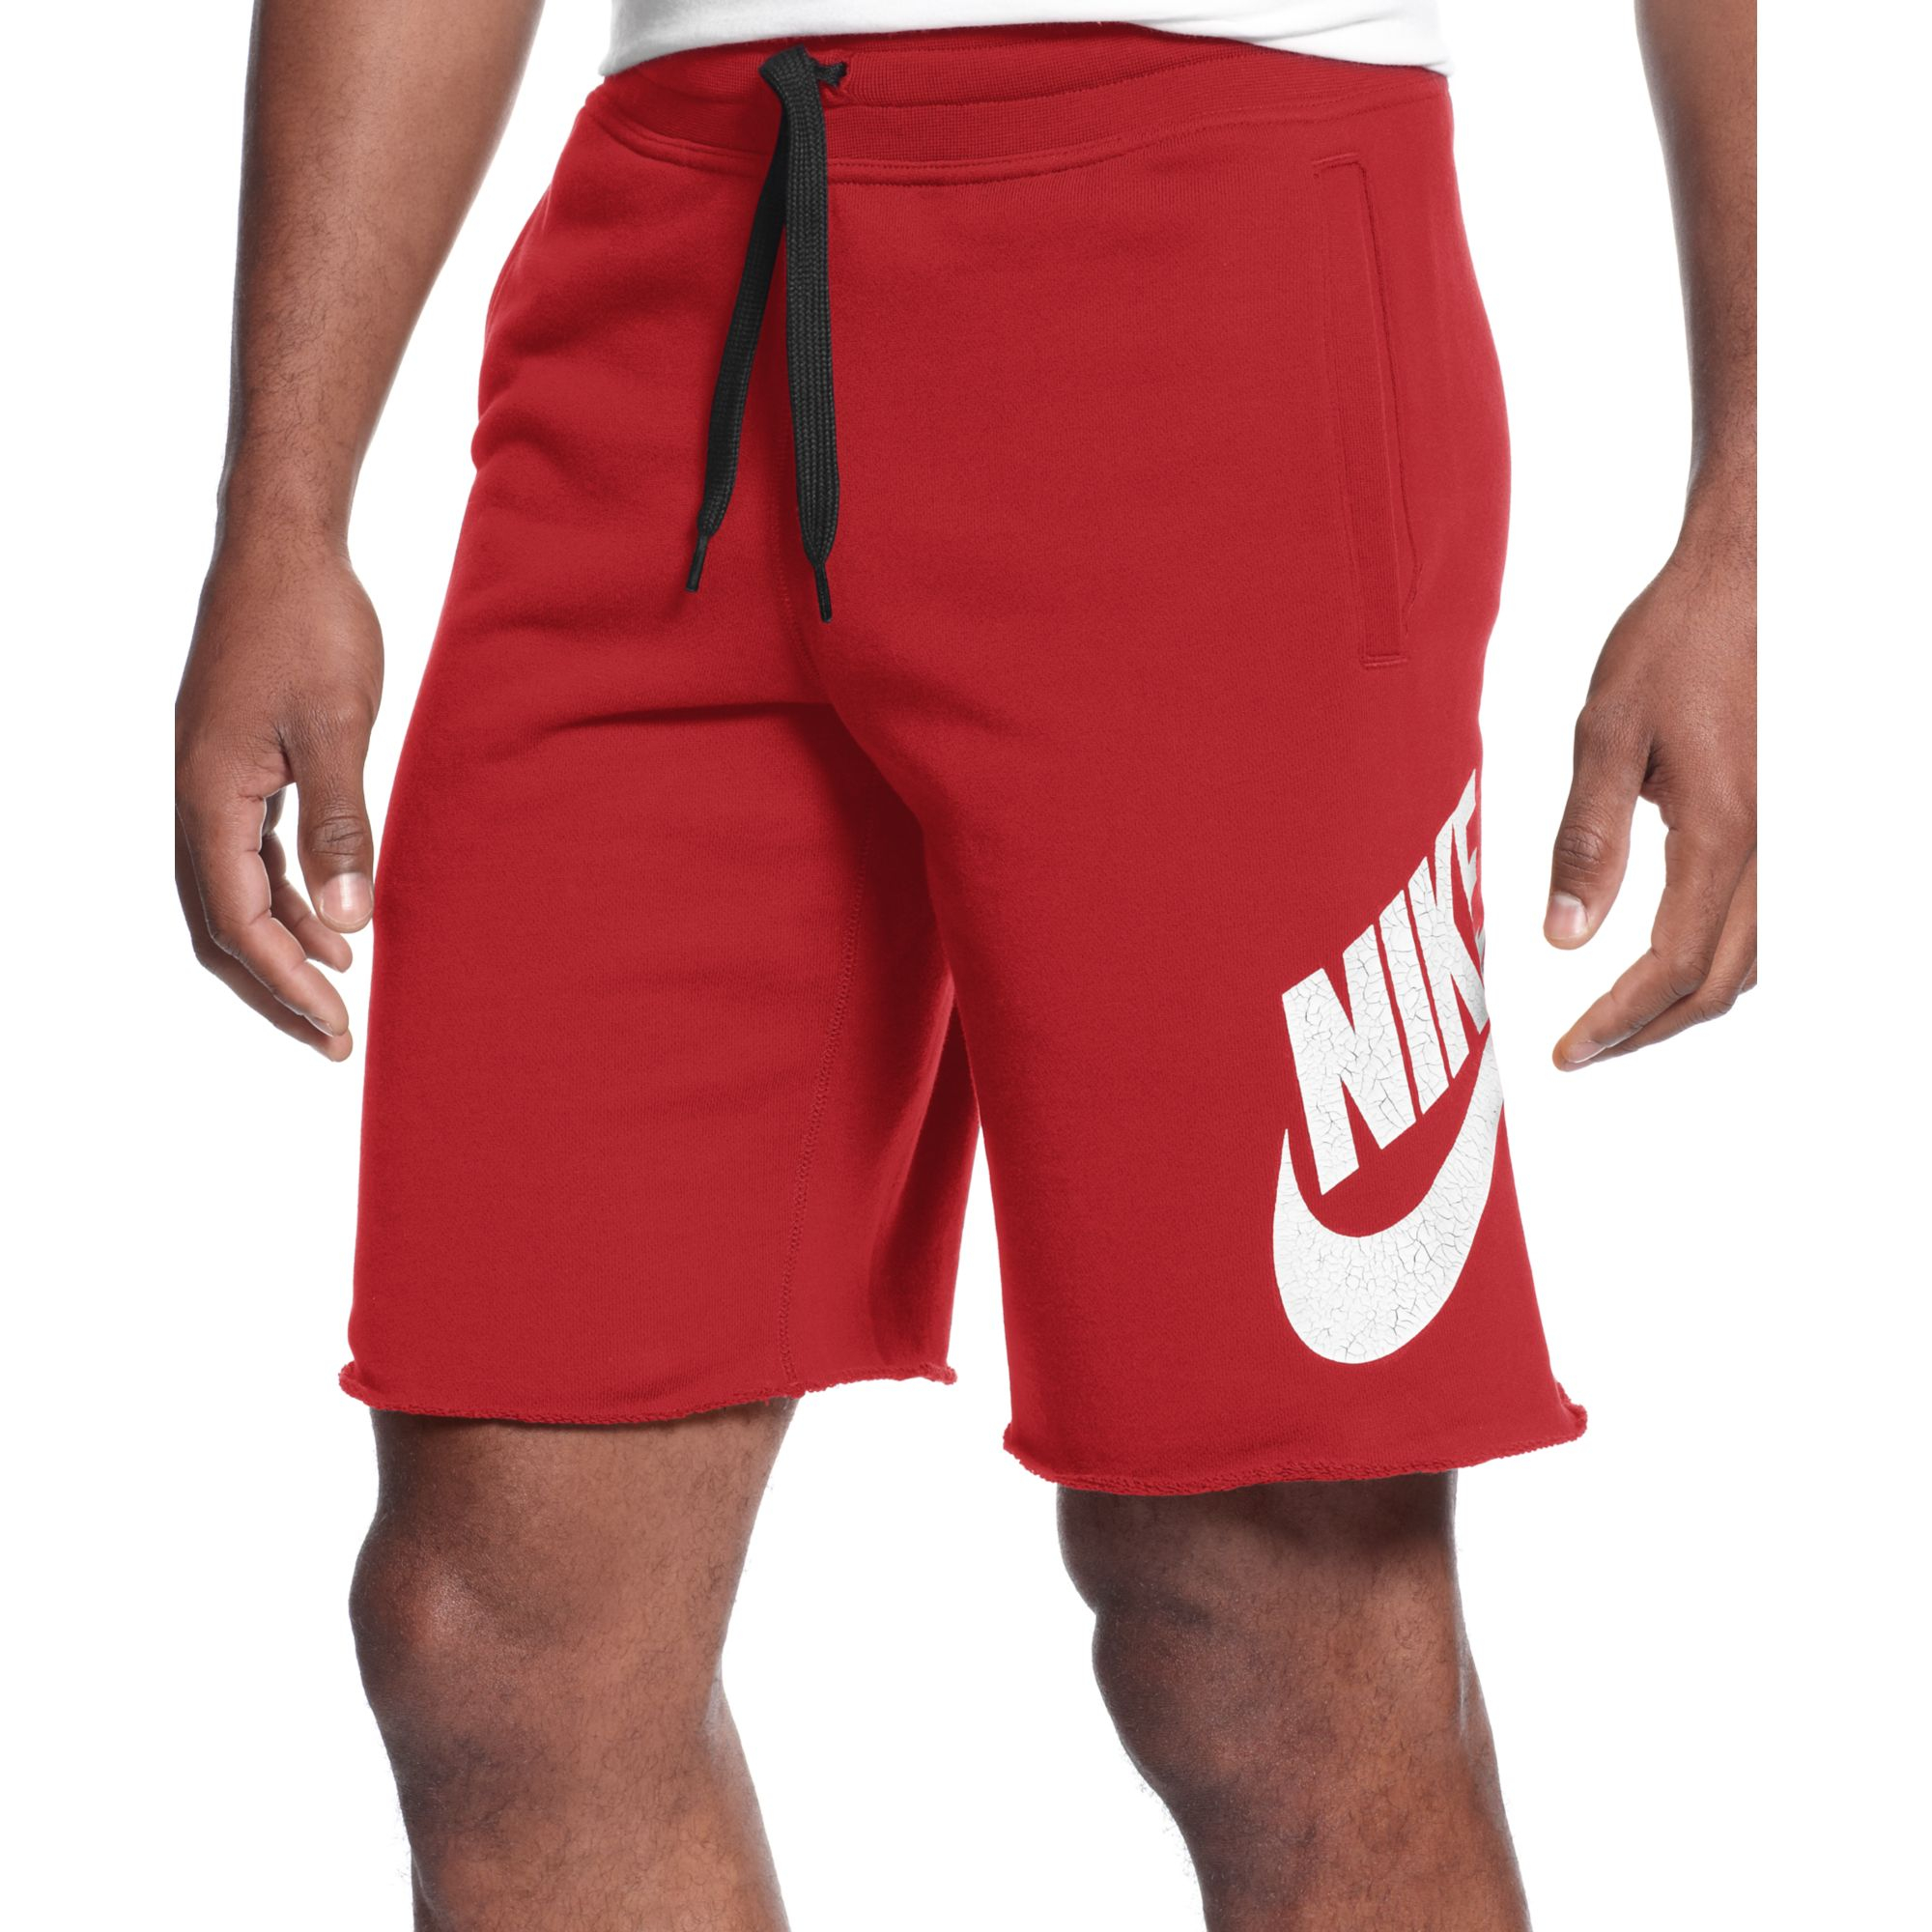 red nike shorts fleece